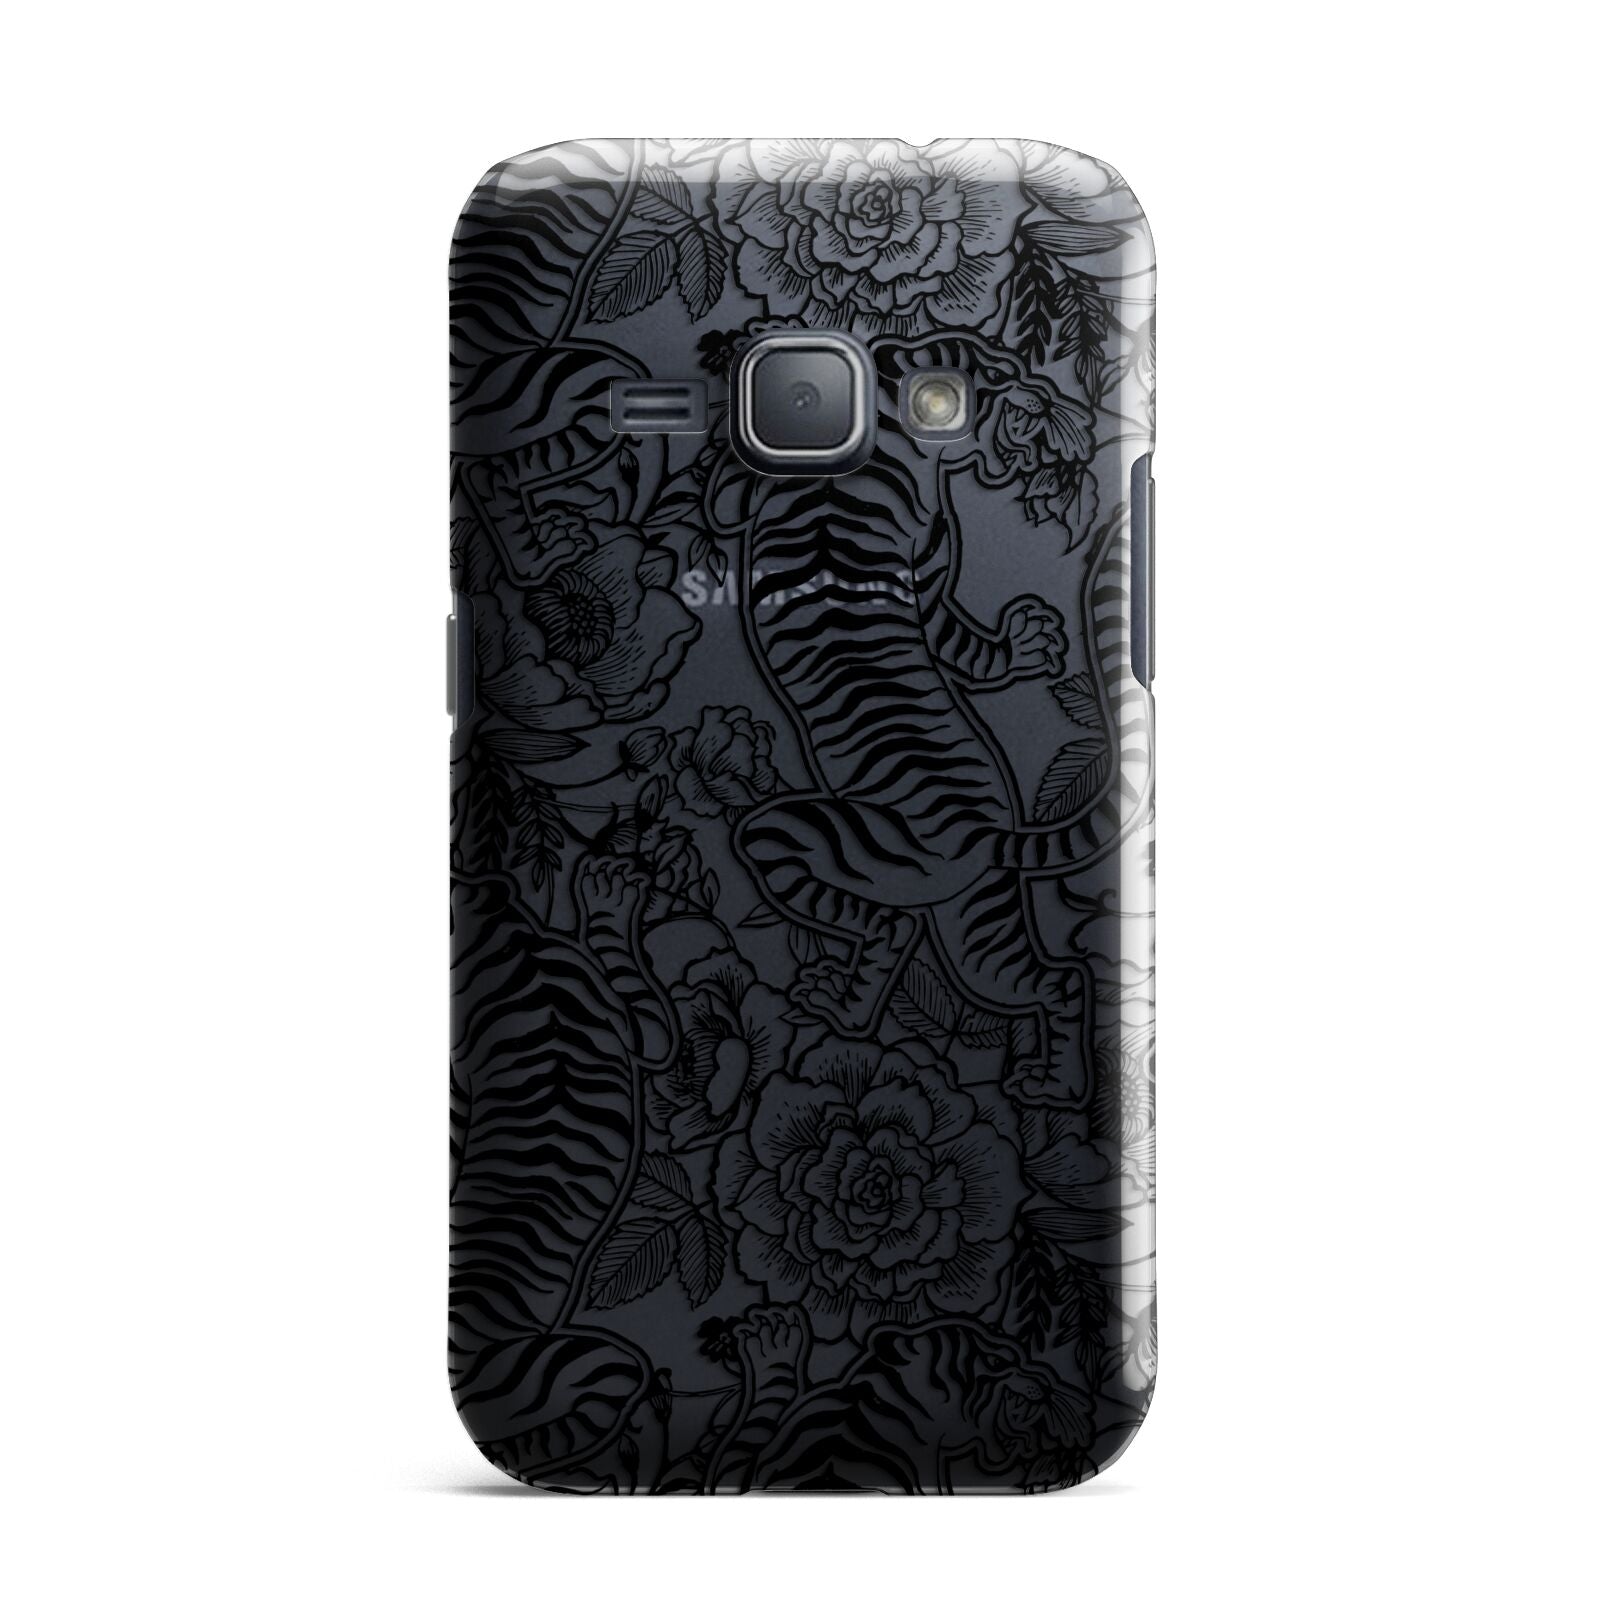 Chinese Tiger Samsung Galaxy J1 2016 Case